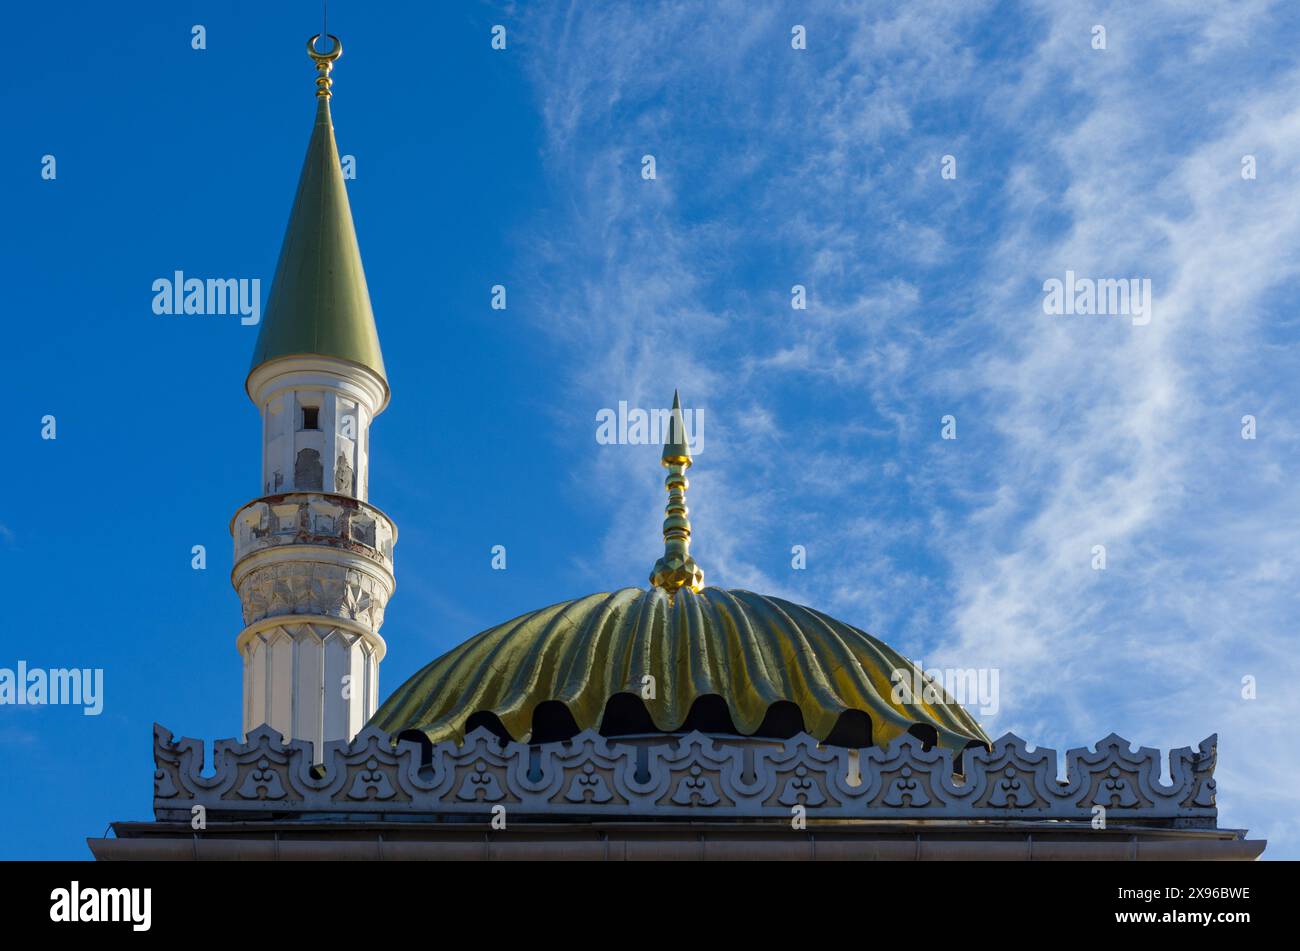 Stylized minaret and gilded dome on the Turkish Bath building (Tsarskoye Selo, St. Petersburg, Russia) Stock Photo